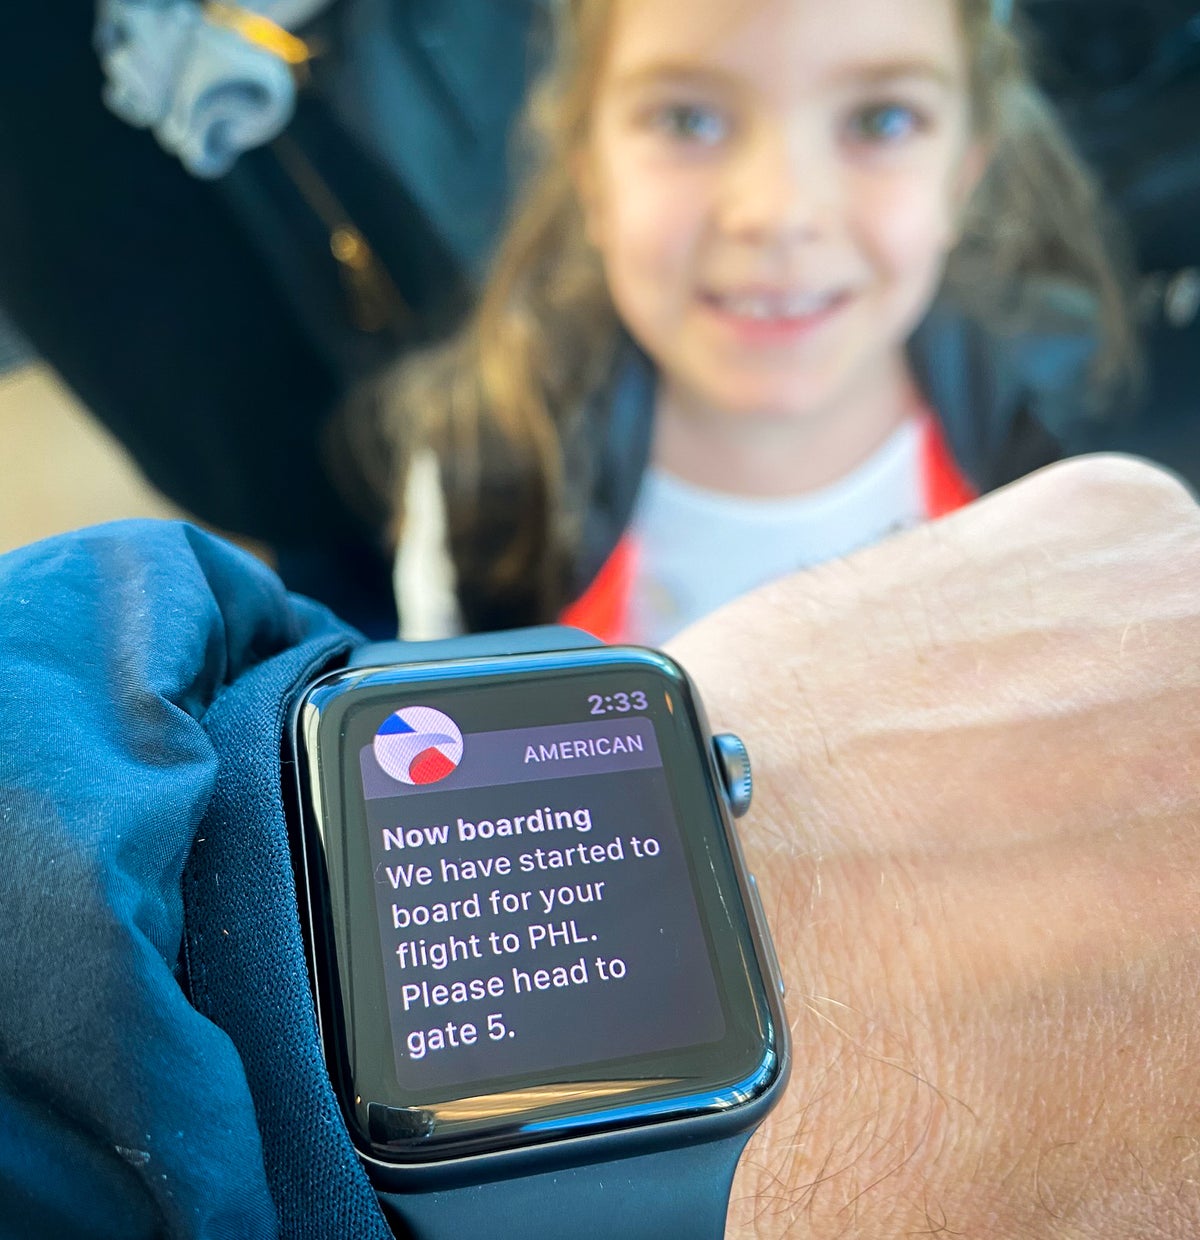 American Airlines Boarding on Apple Watch app